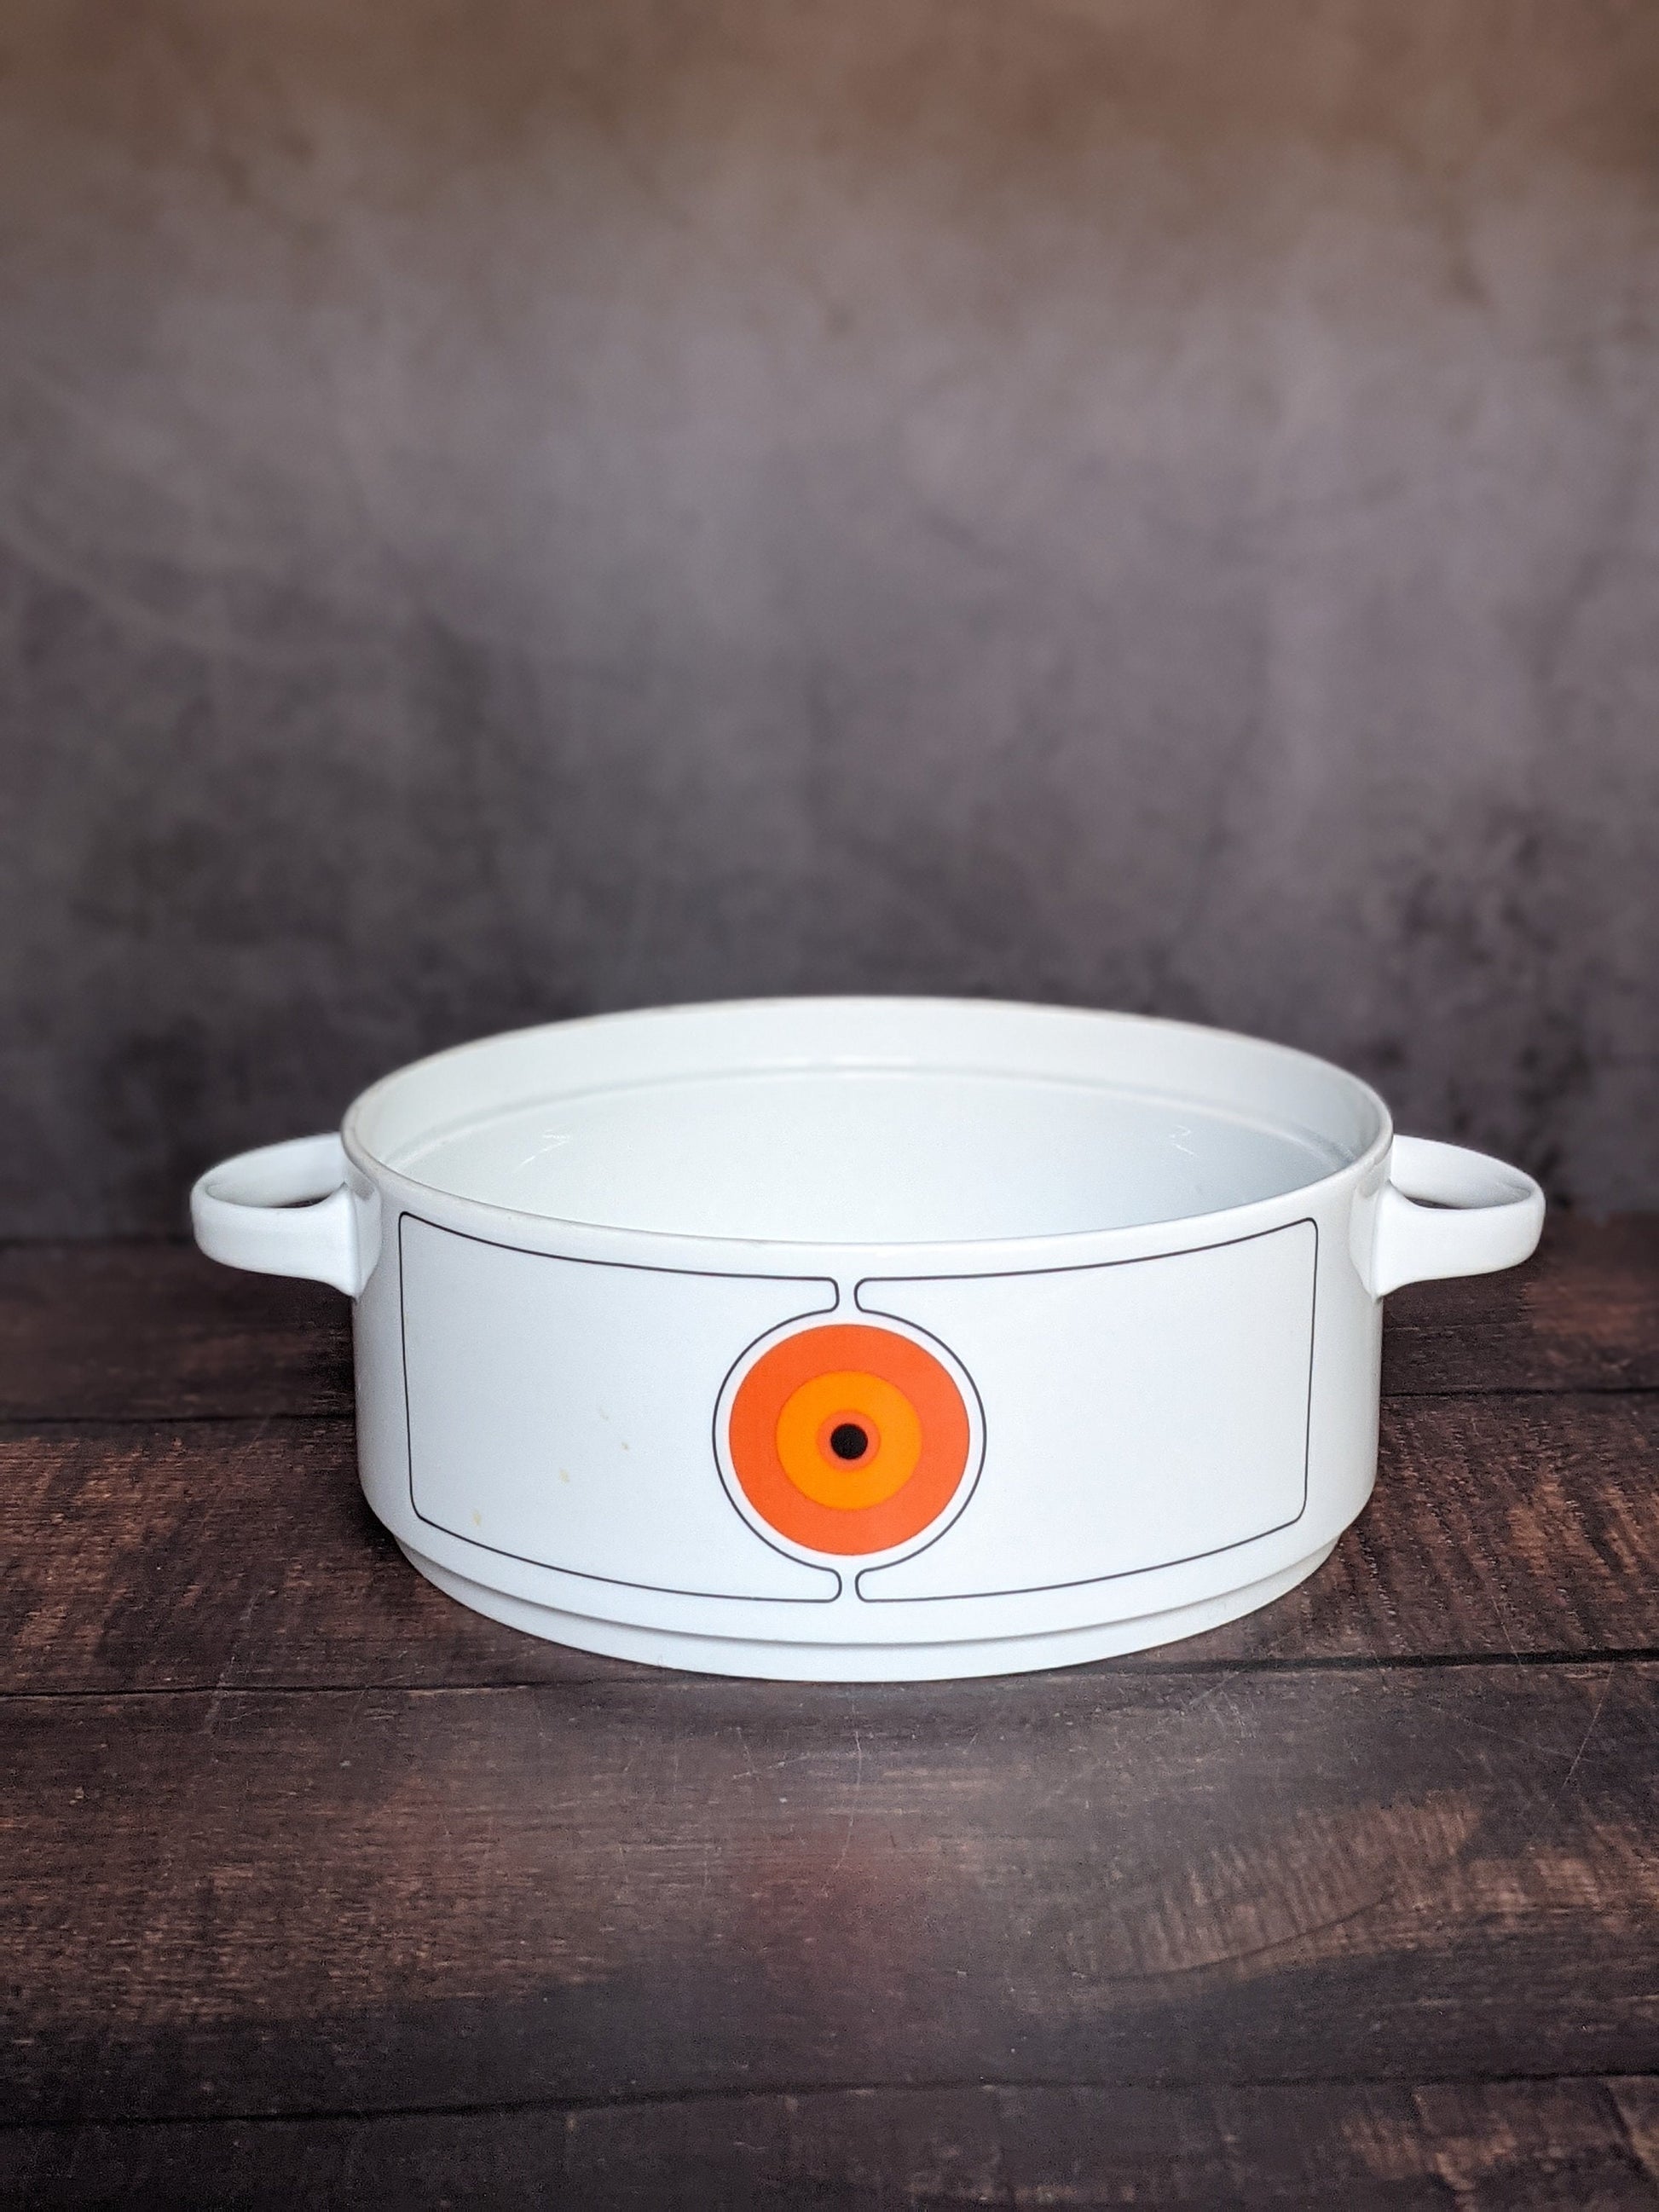 4- Thomas Rosenthal saucepans with lids.